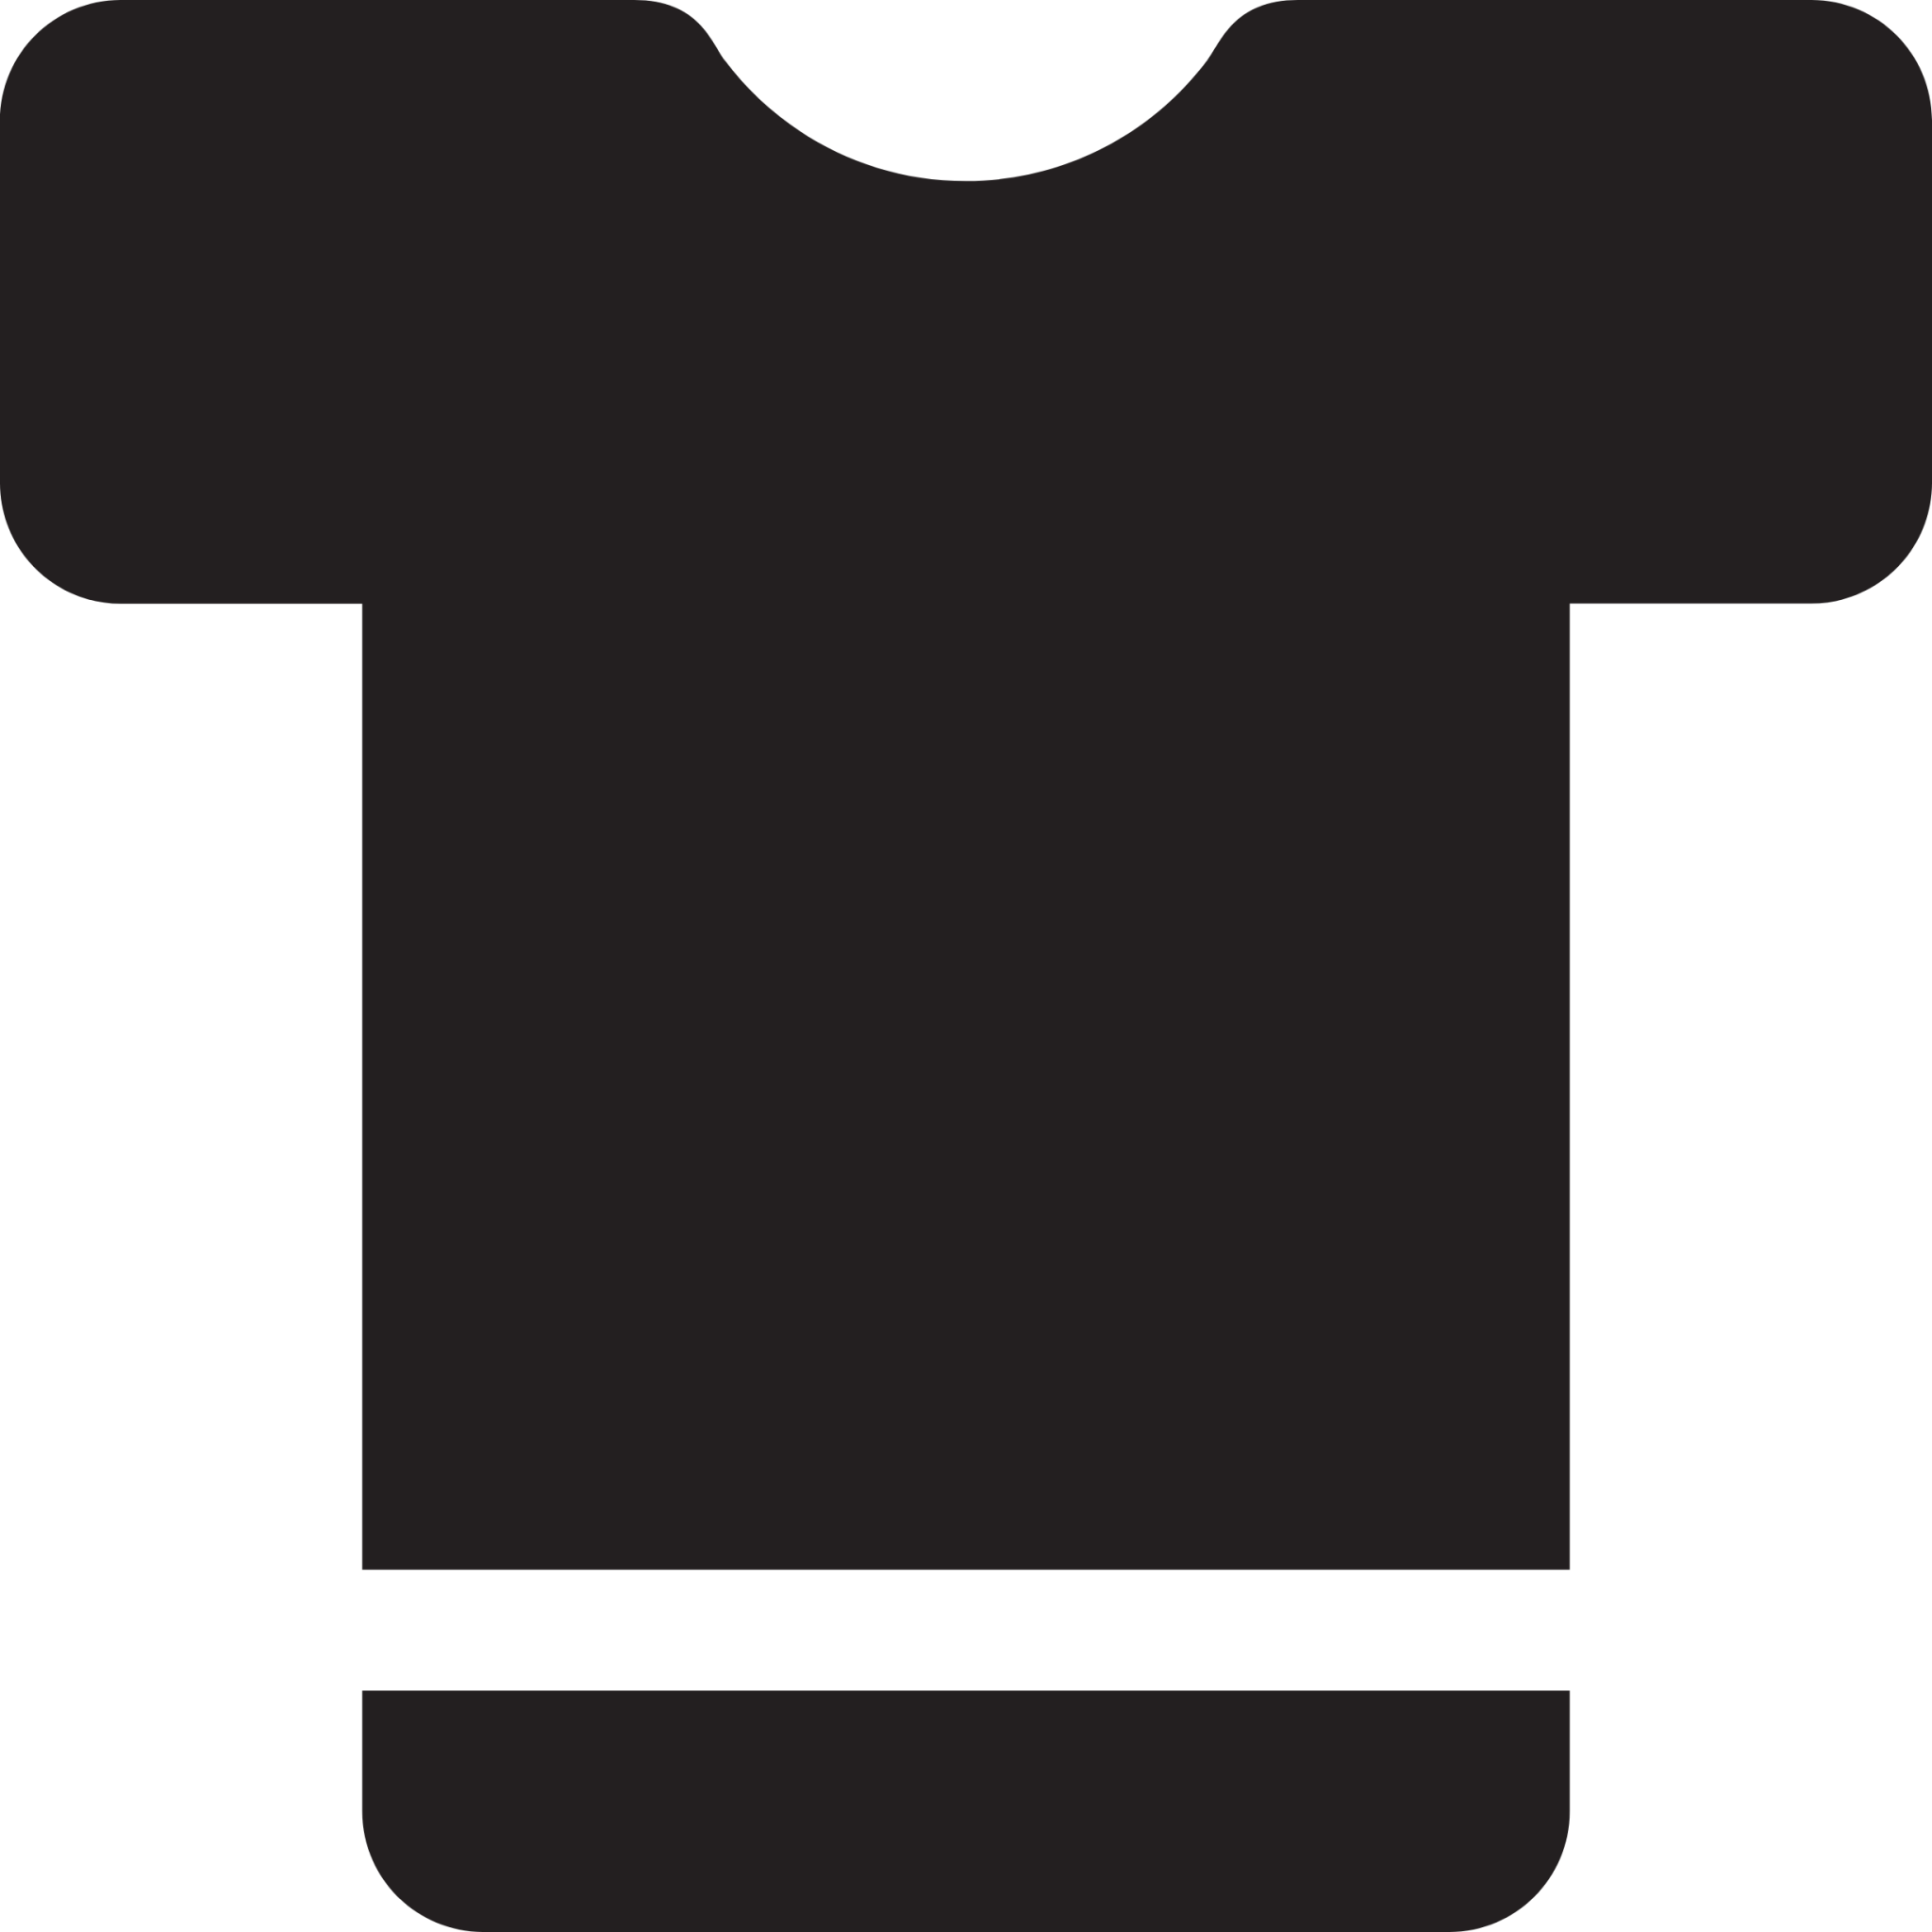 t shirt icon